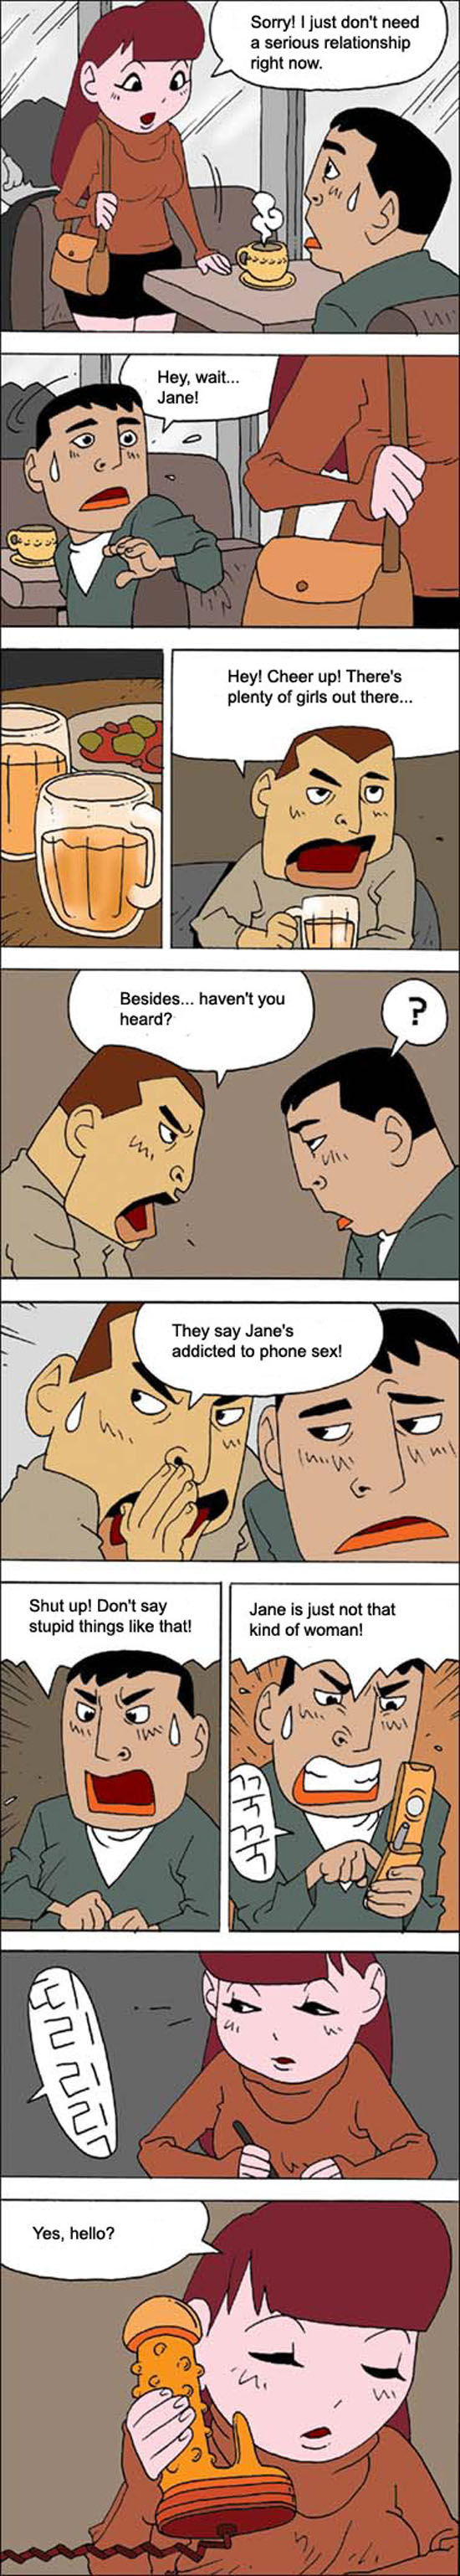 Funny Korean Comic Strips. Part 2